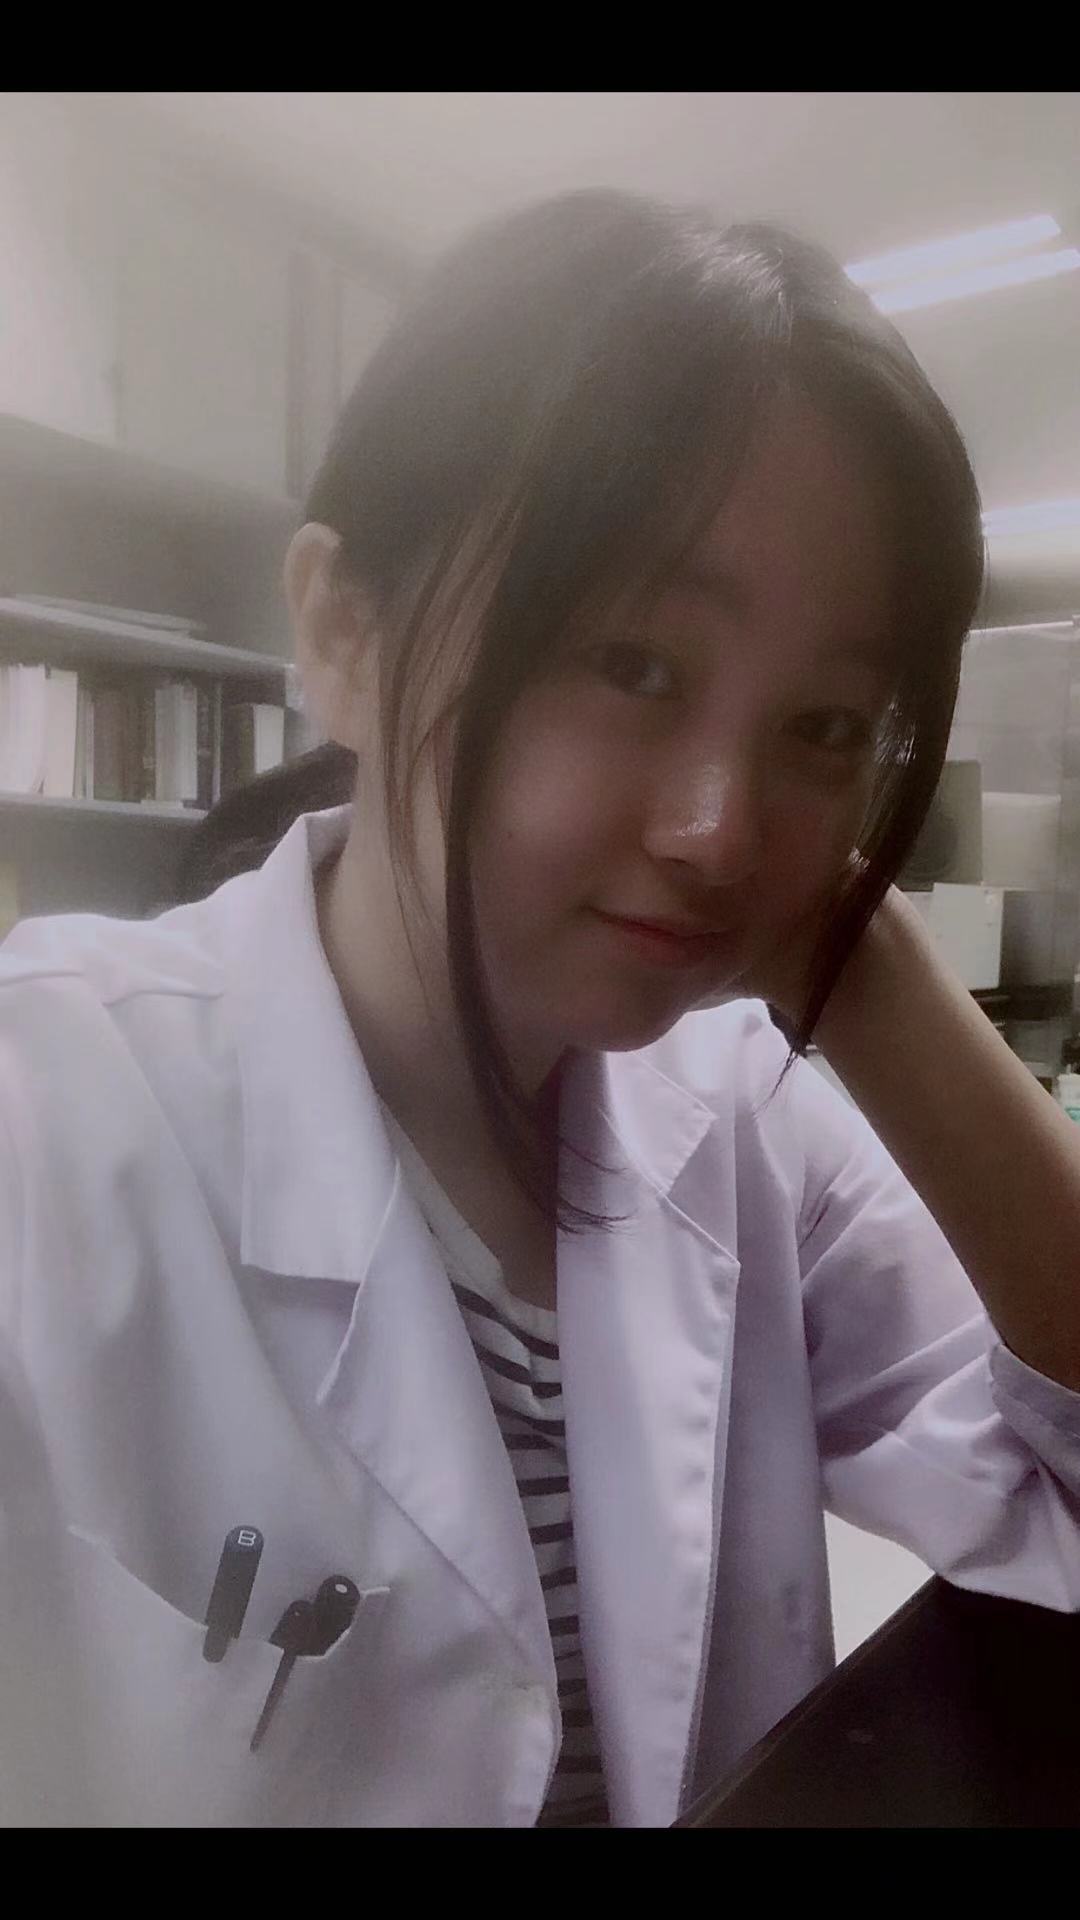 Yetong Dong headshot wearing lab coat